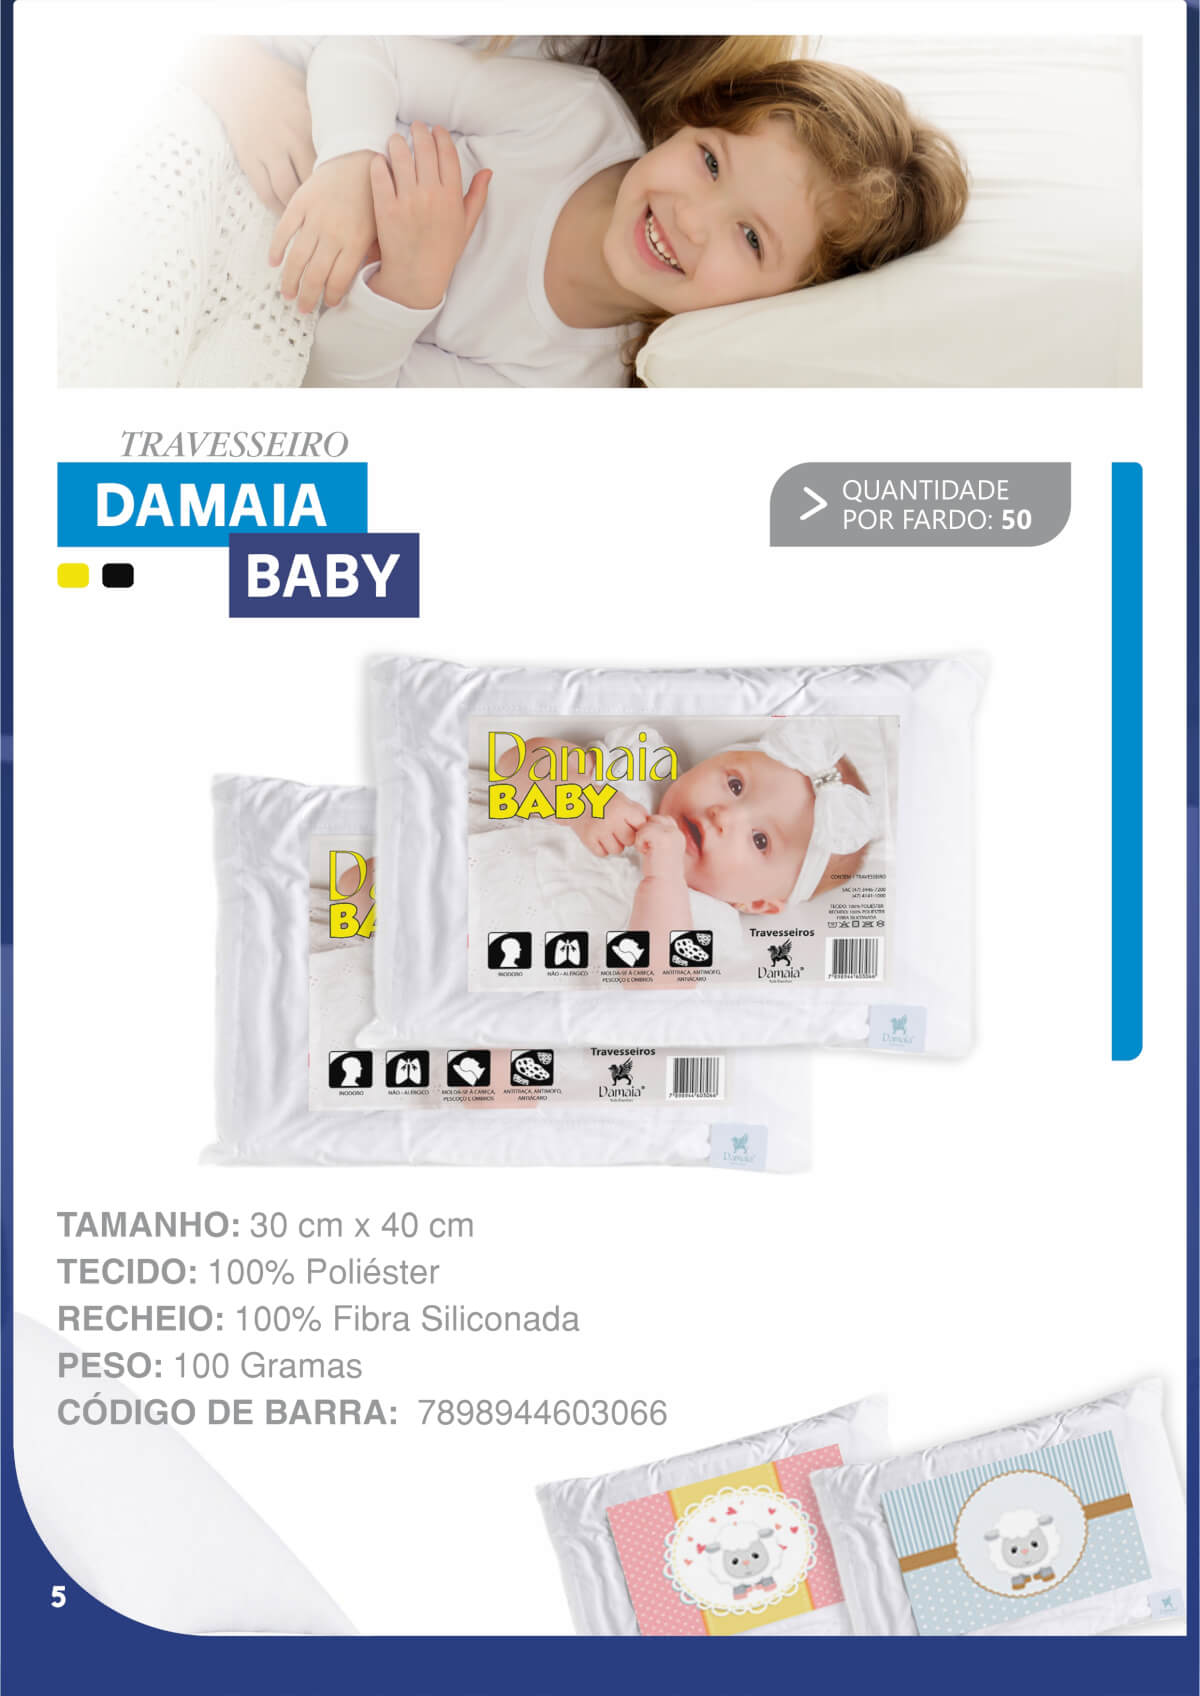 Damaia Baby